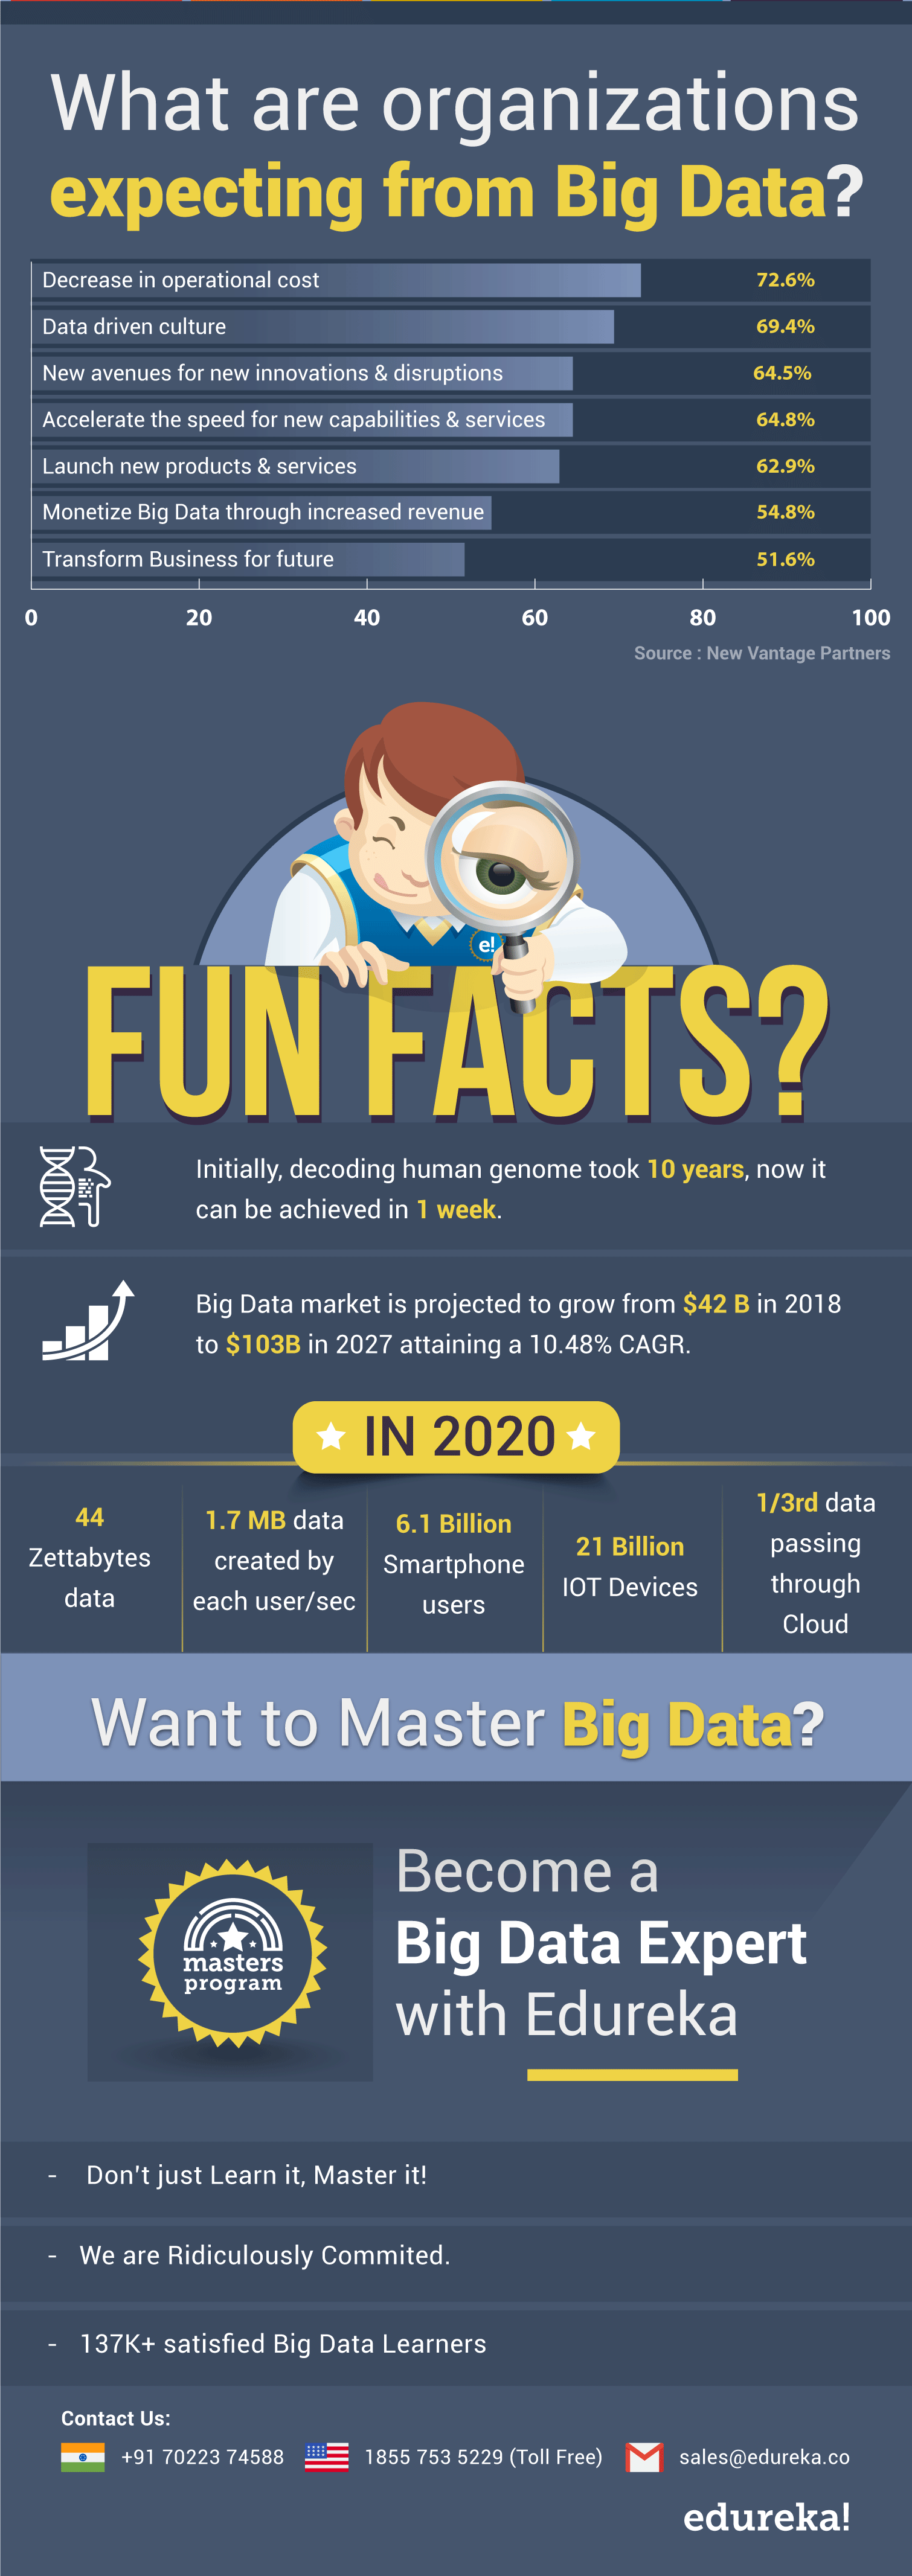 Big Data Infographic Part2 - Edureka